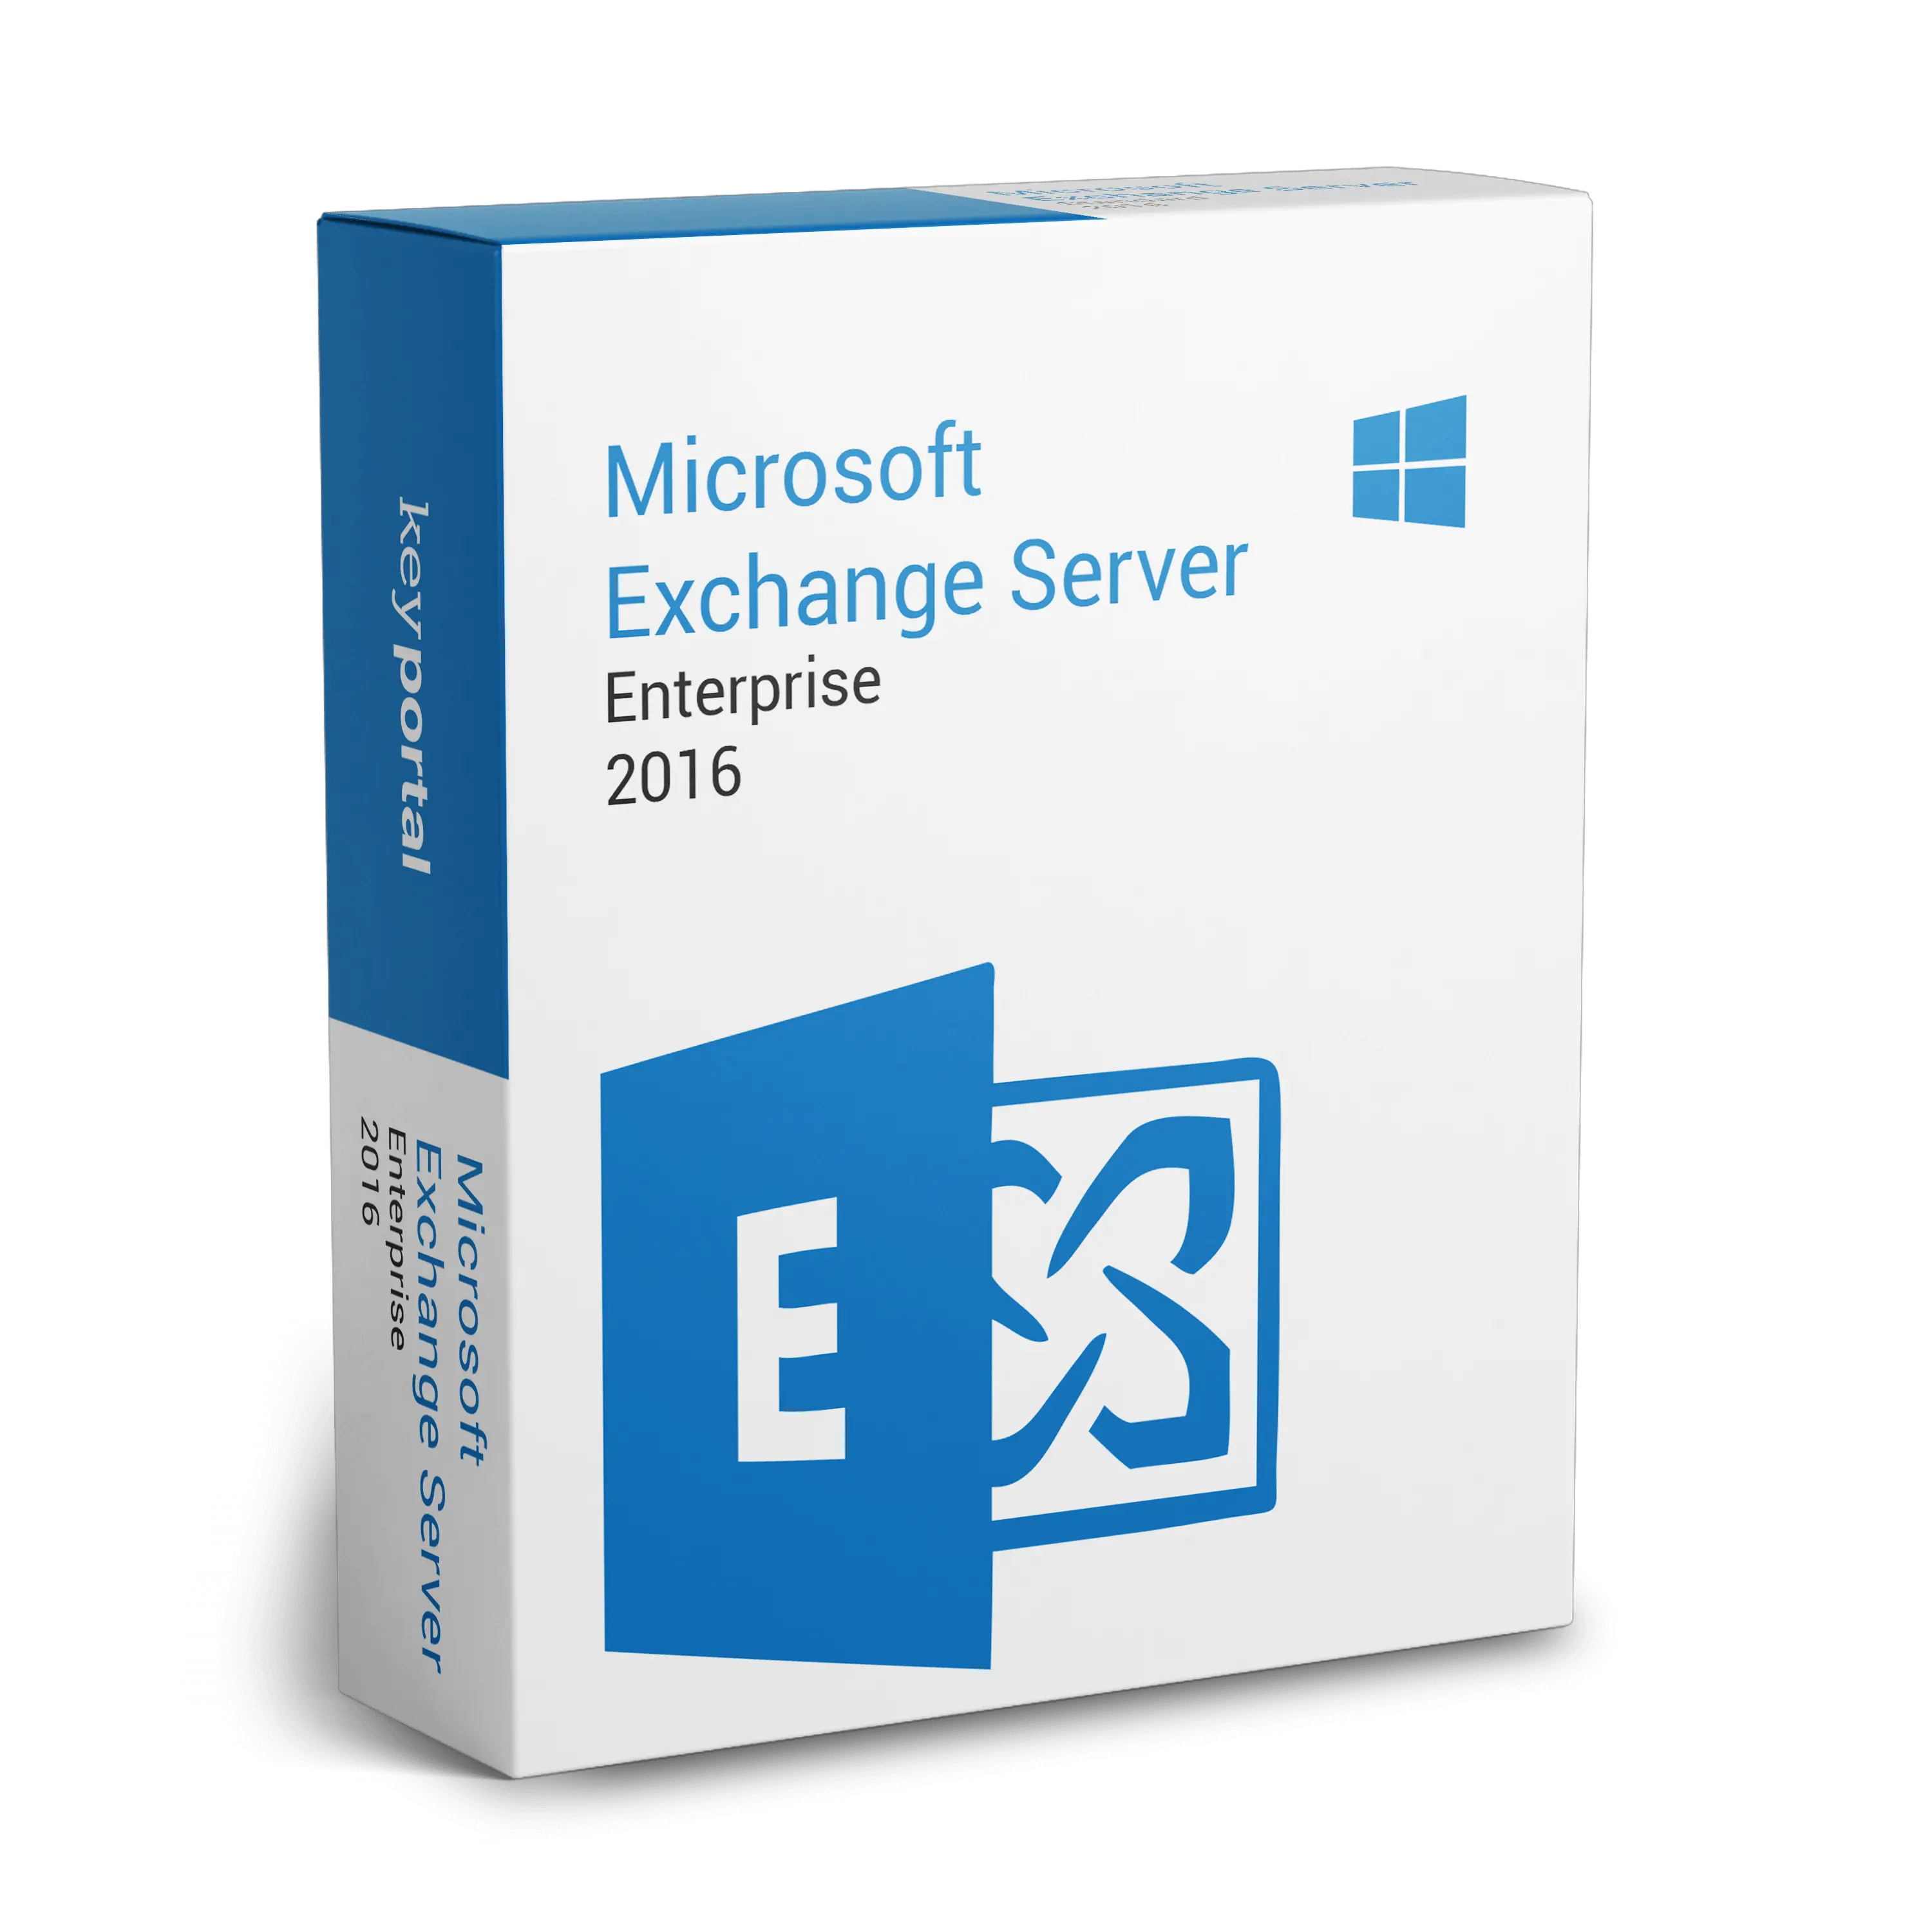 Microsoft Exchange Server 2016 Enterprise